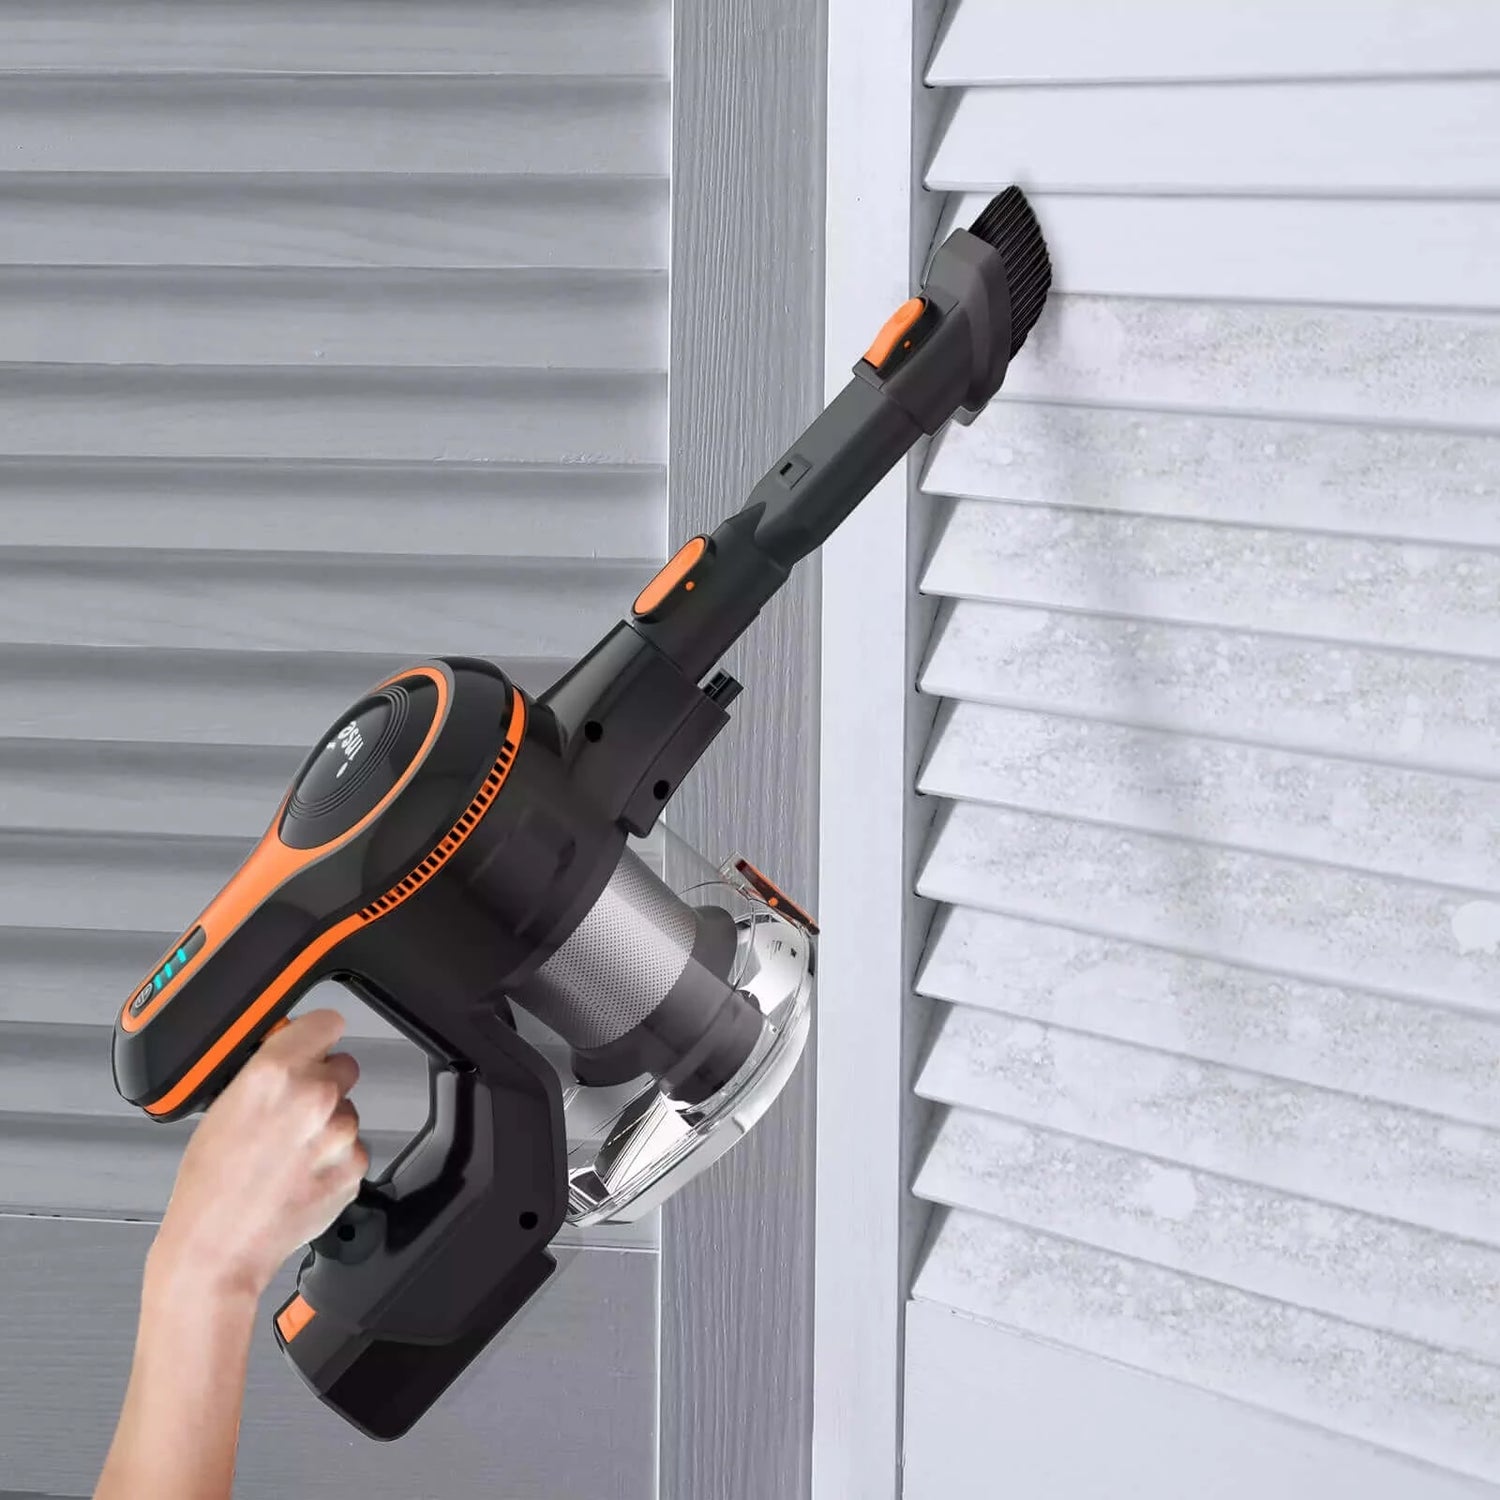 INSE S610 Cordless HEPA Vacuum for Pet Hair&Hardwood Floors